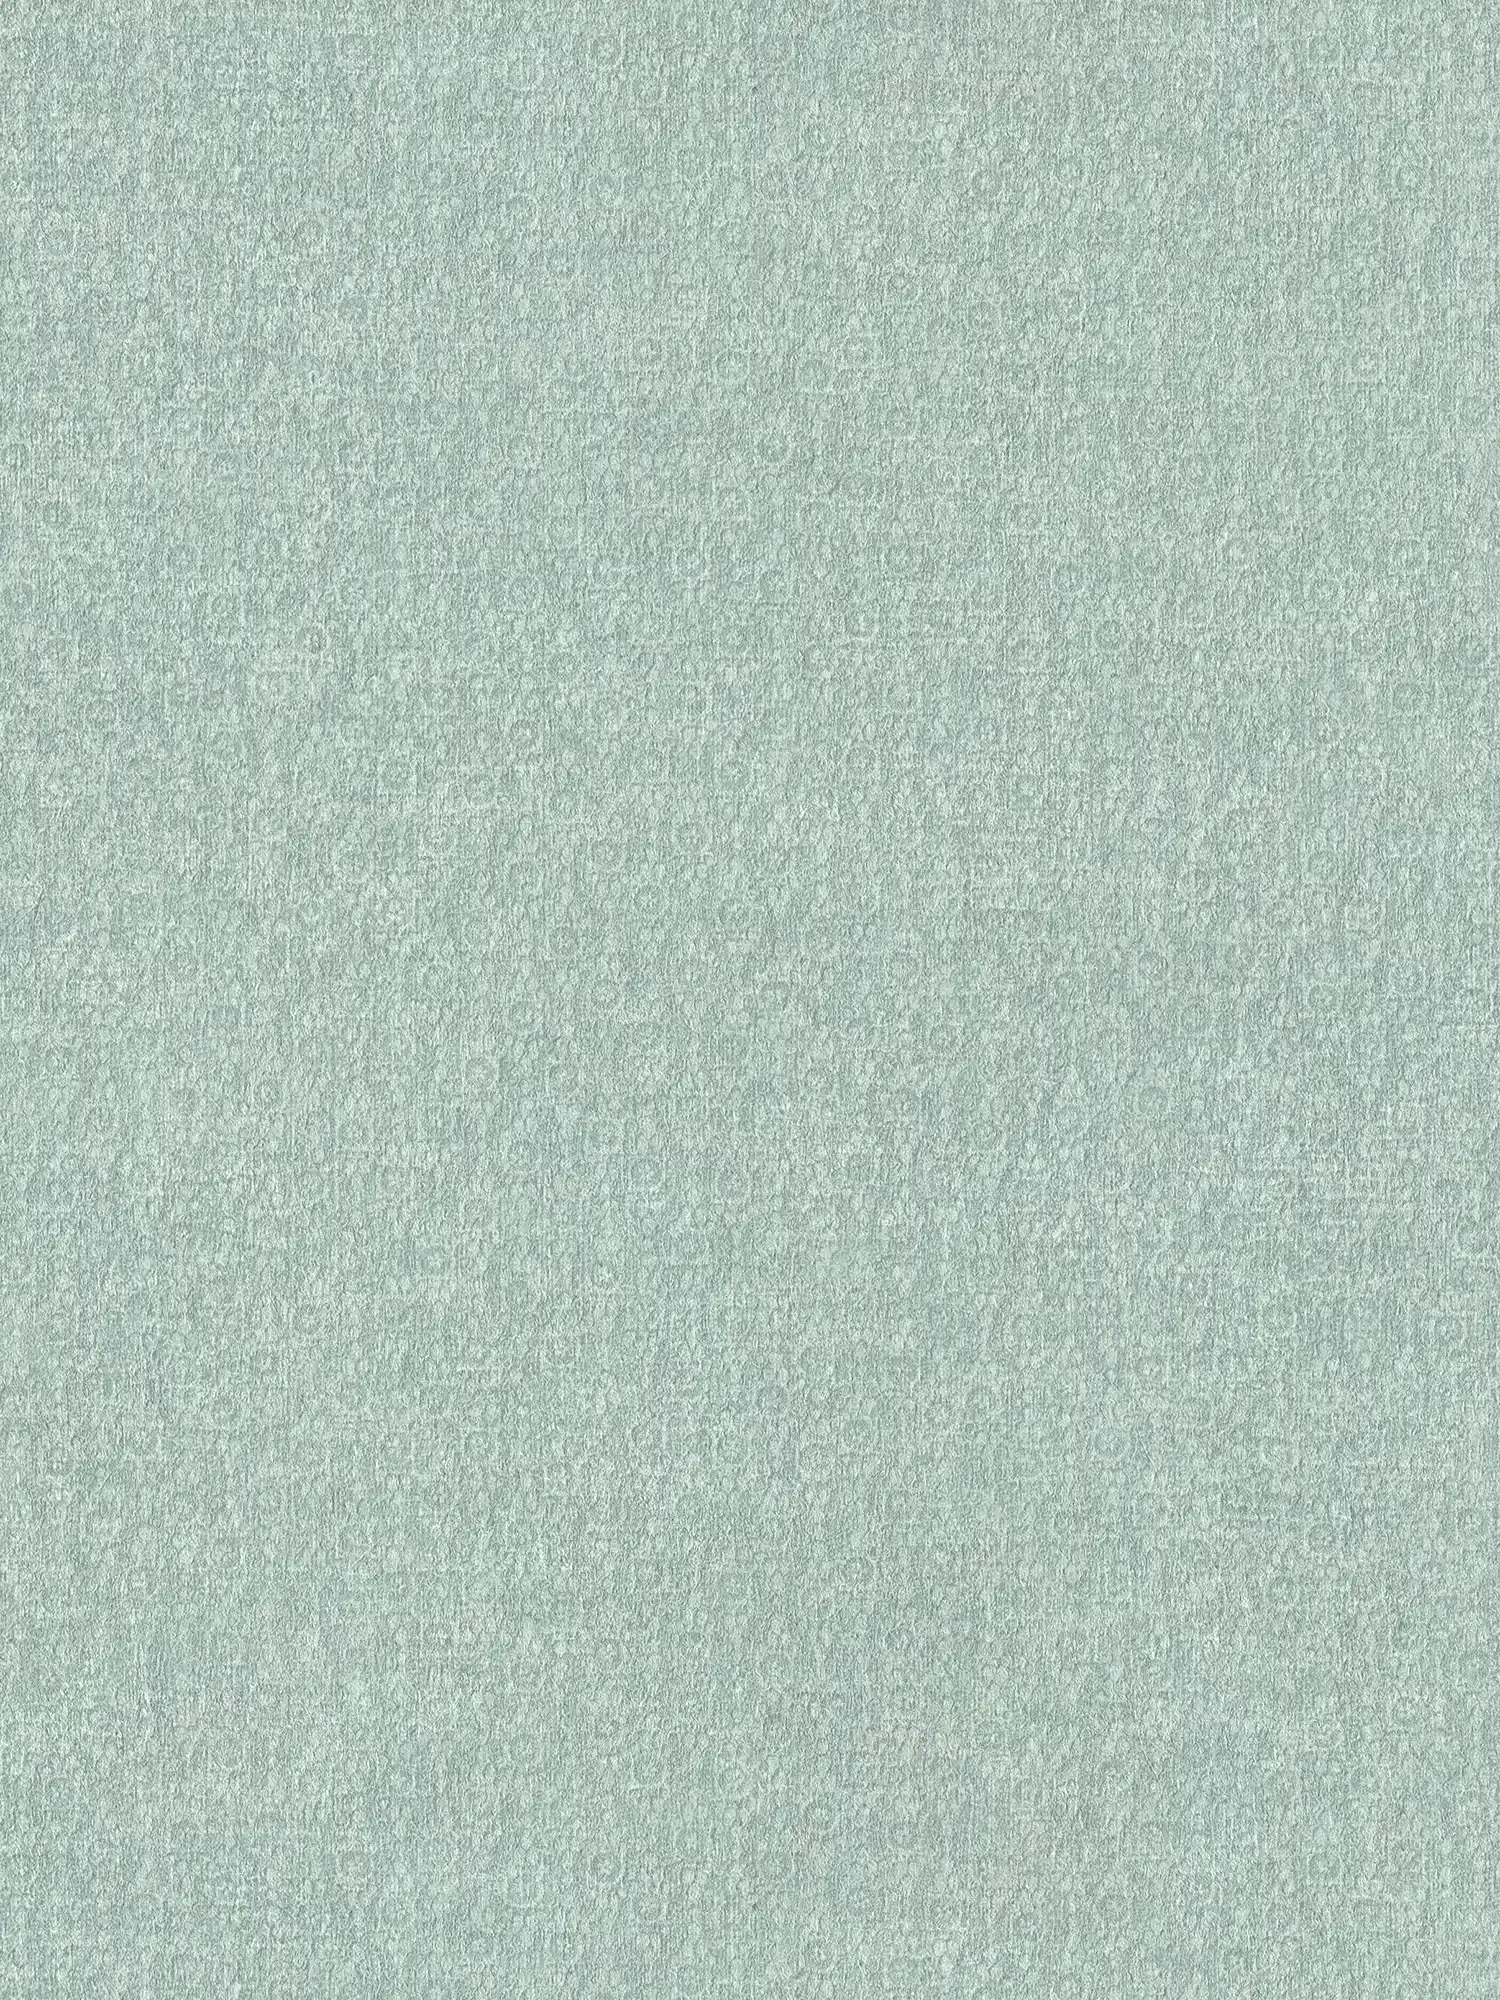         Strukturtapete Mintgrün mit Ton-in-Ton Muster
    